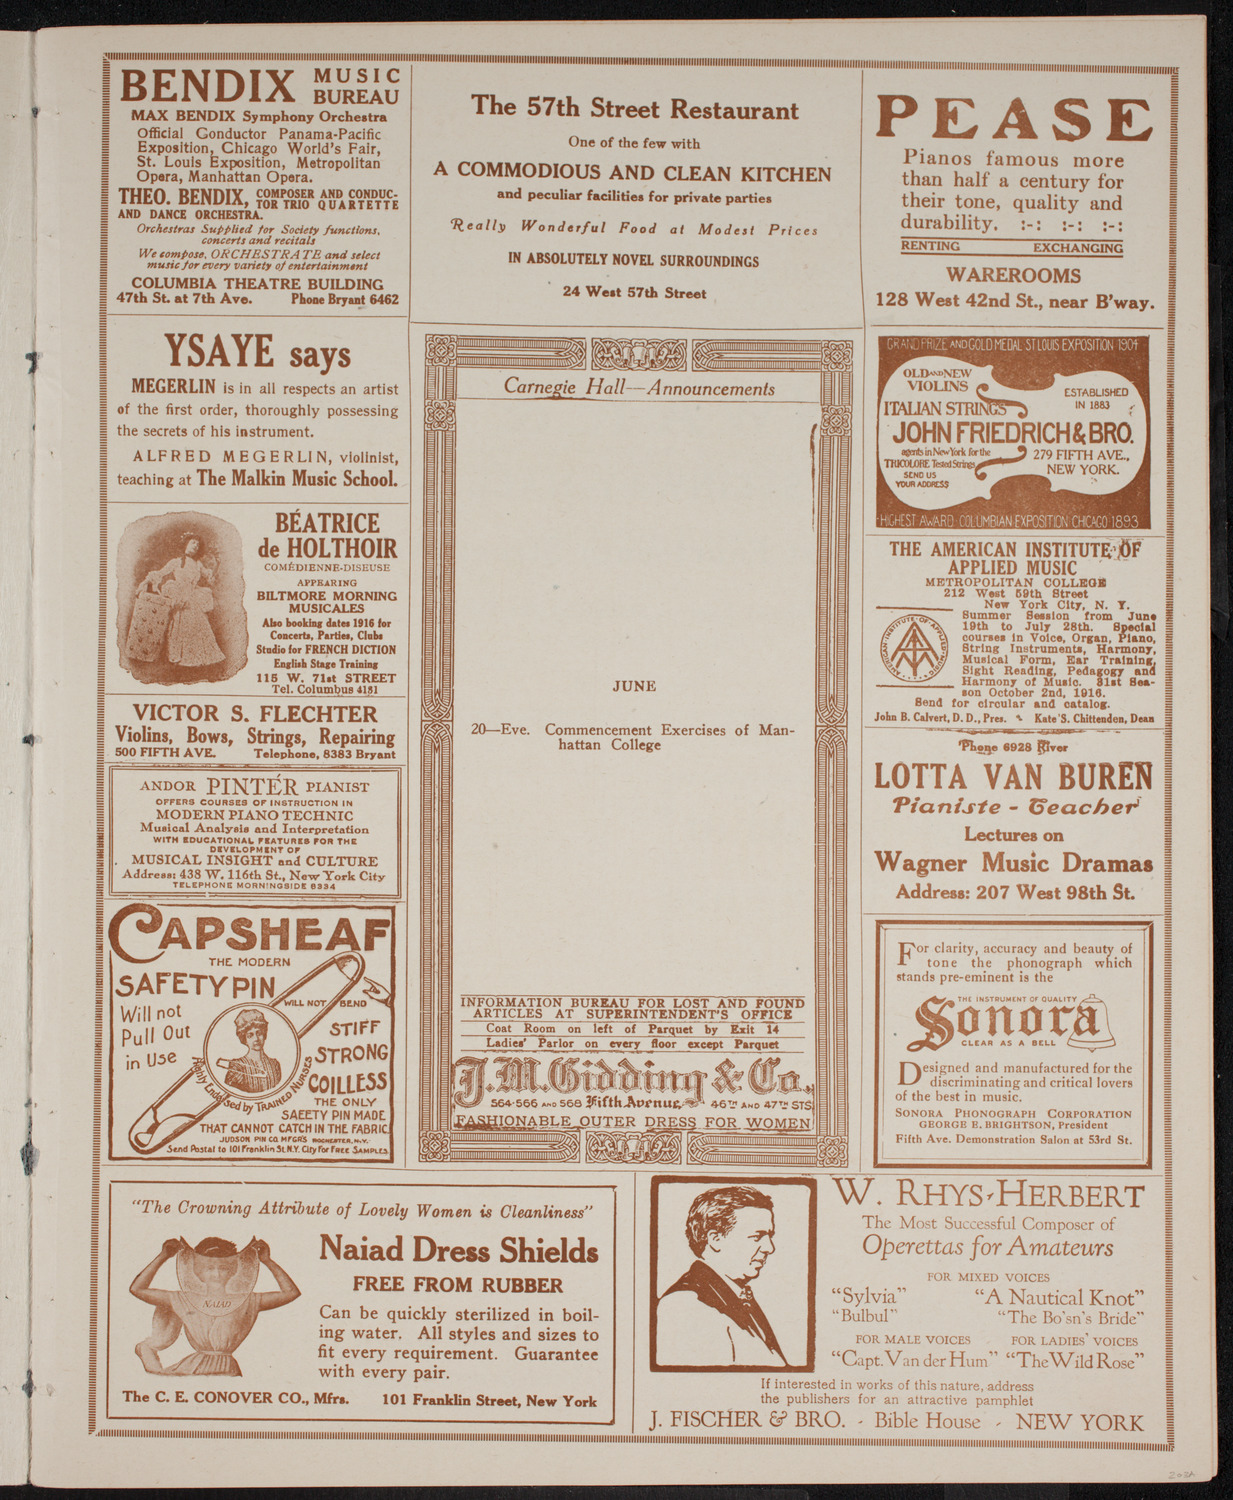 Graduation: New York College of Dentistry, June 15, 1916, program page 3